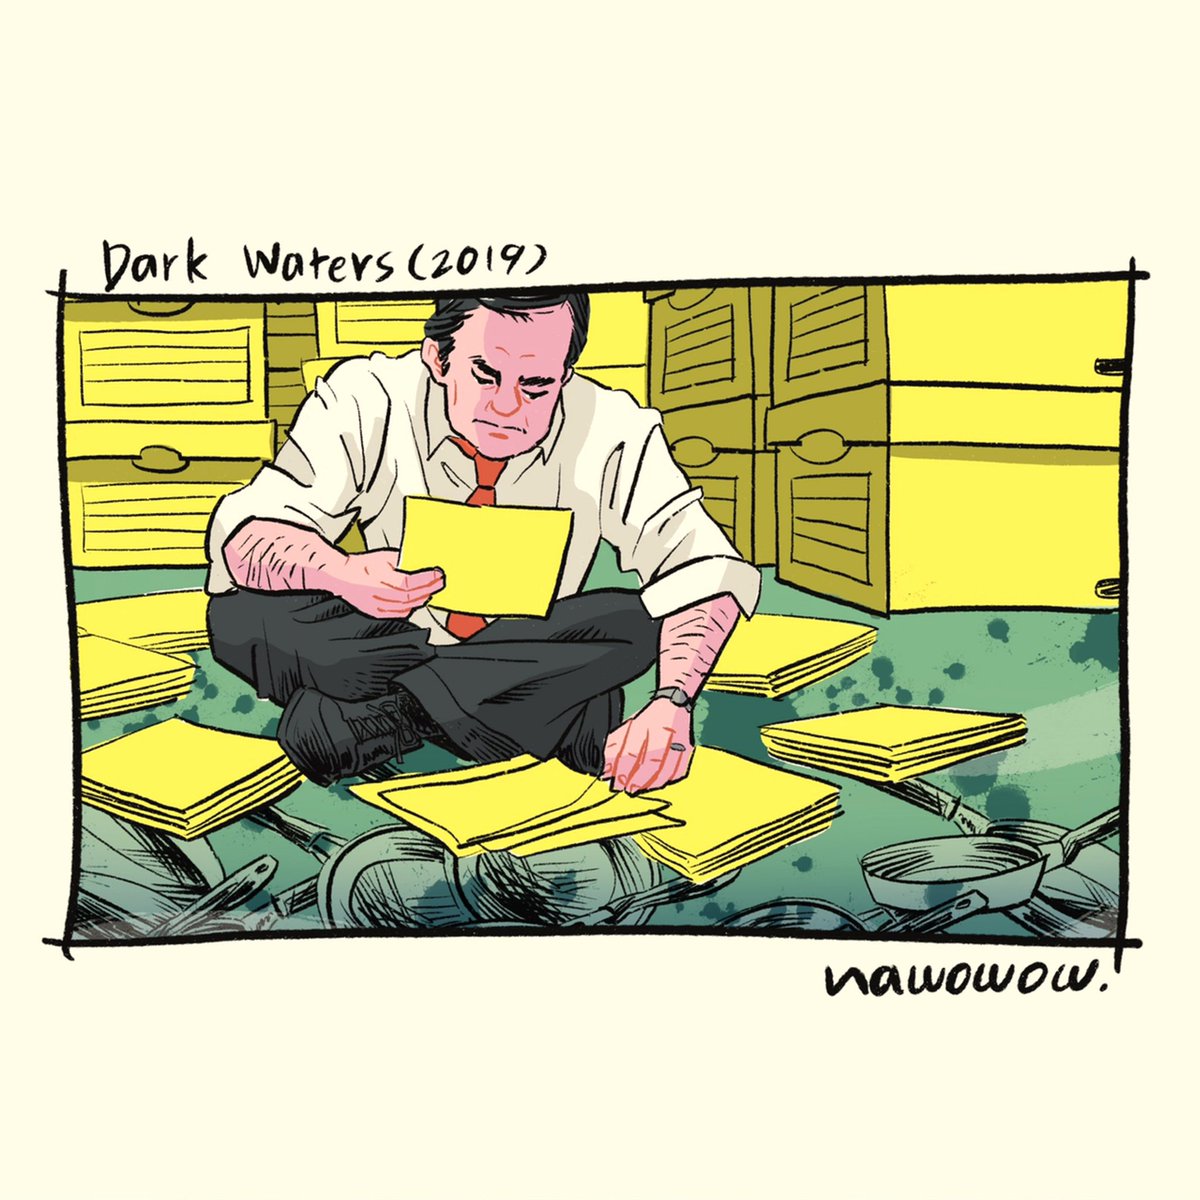 Dark Waters | ダーク・ウォーターズ 巨大企業が恐れた男 (2019)

観てから少し経つけどやっぱり感想書きたいから描いた。 